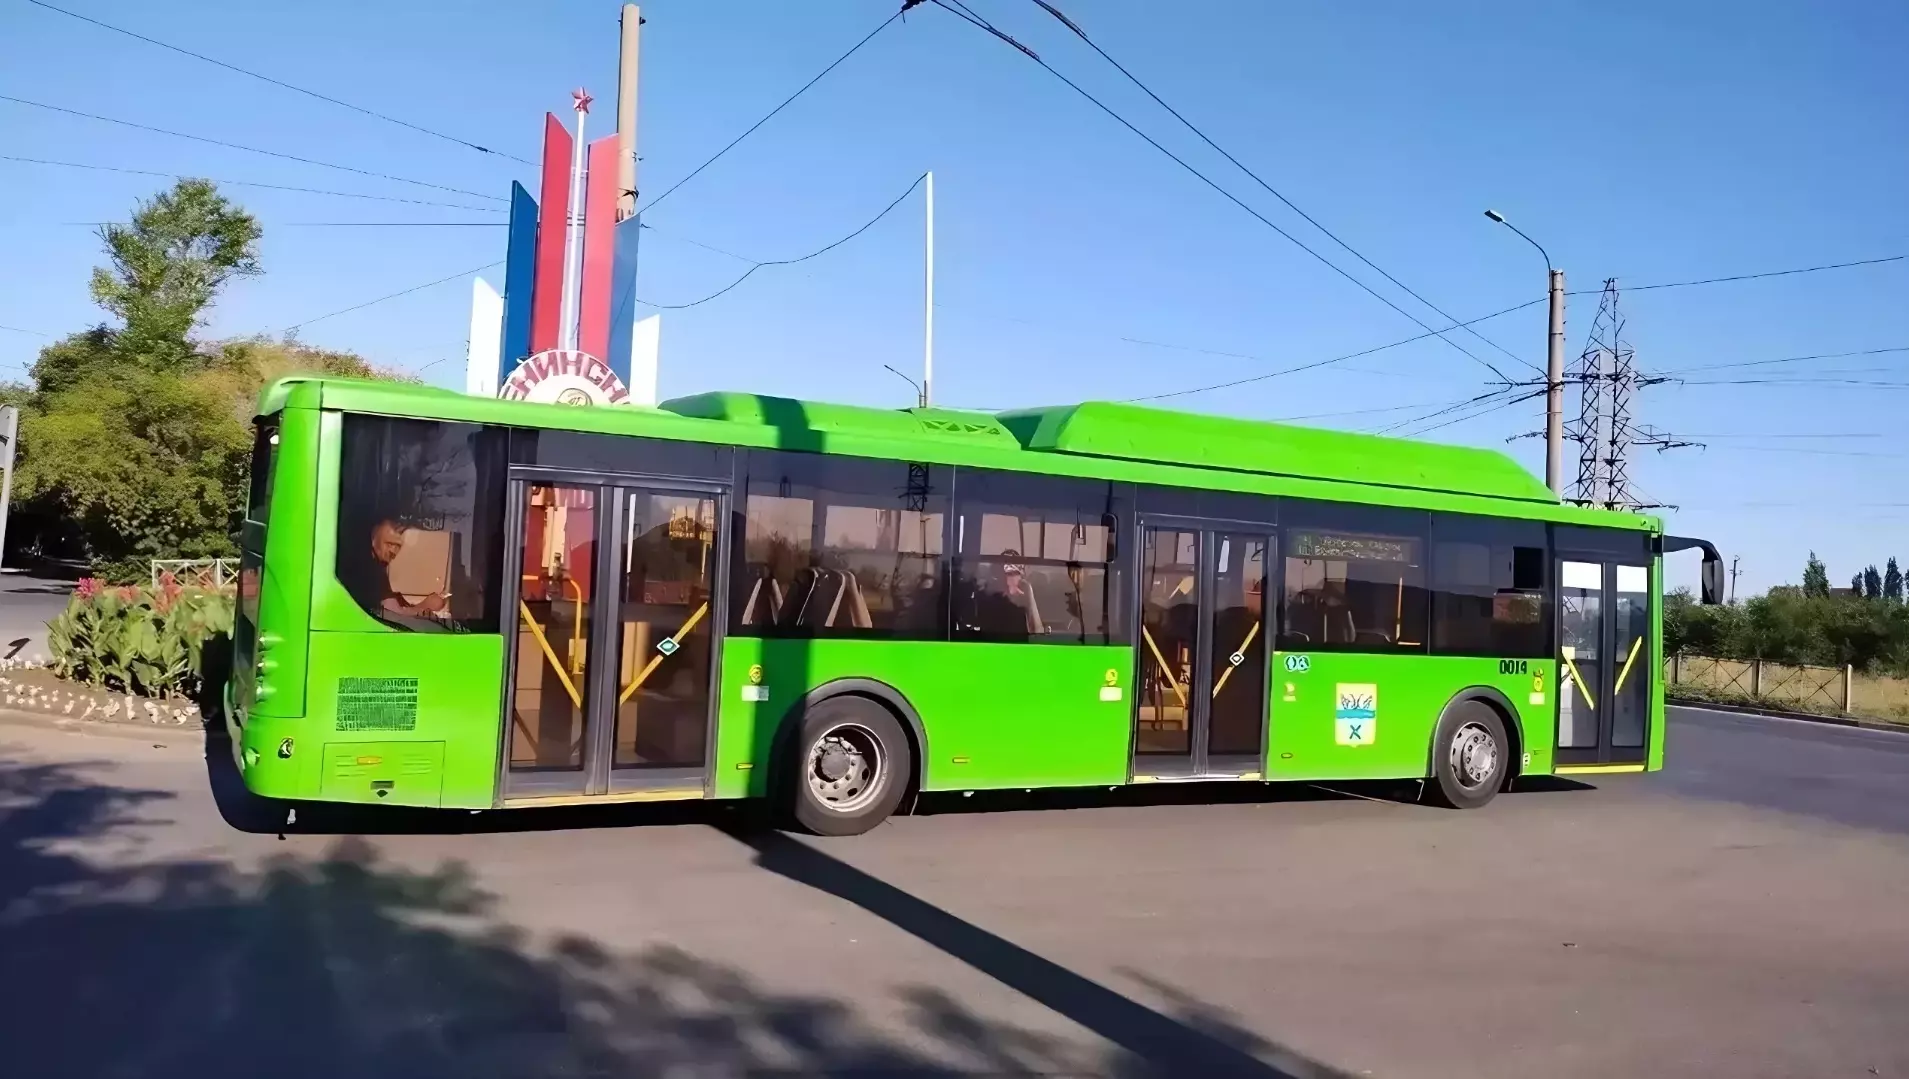 Тариф в автобусе по-прежнему 30 рублей